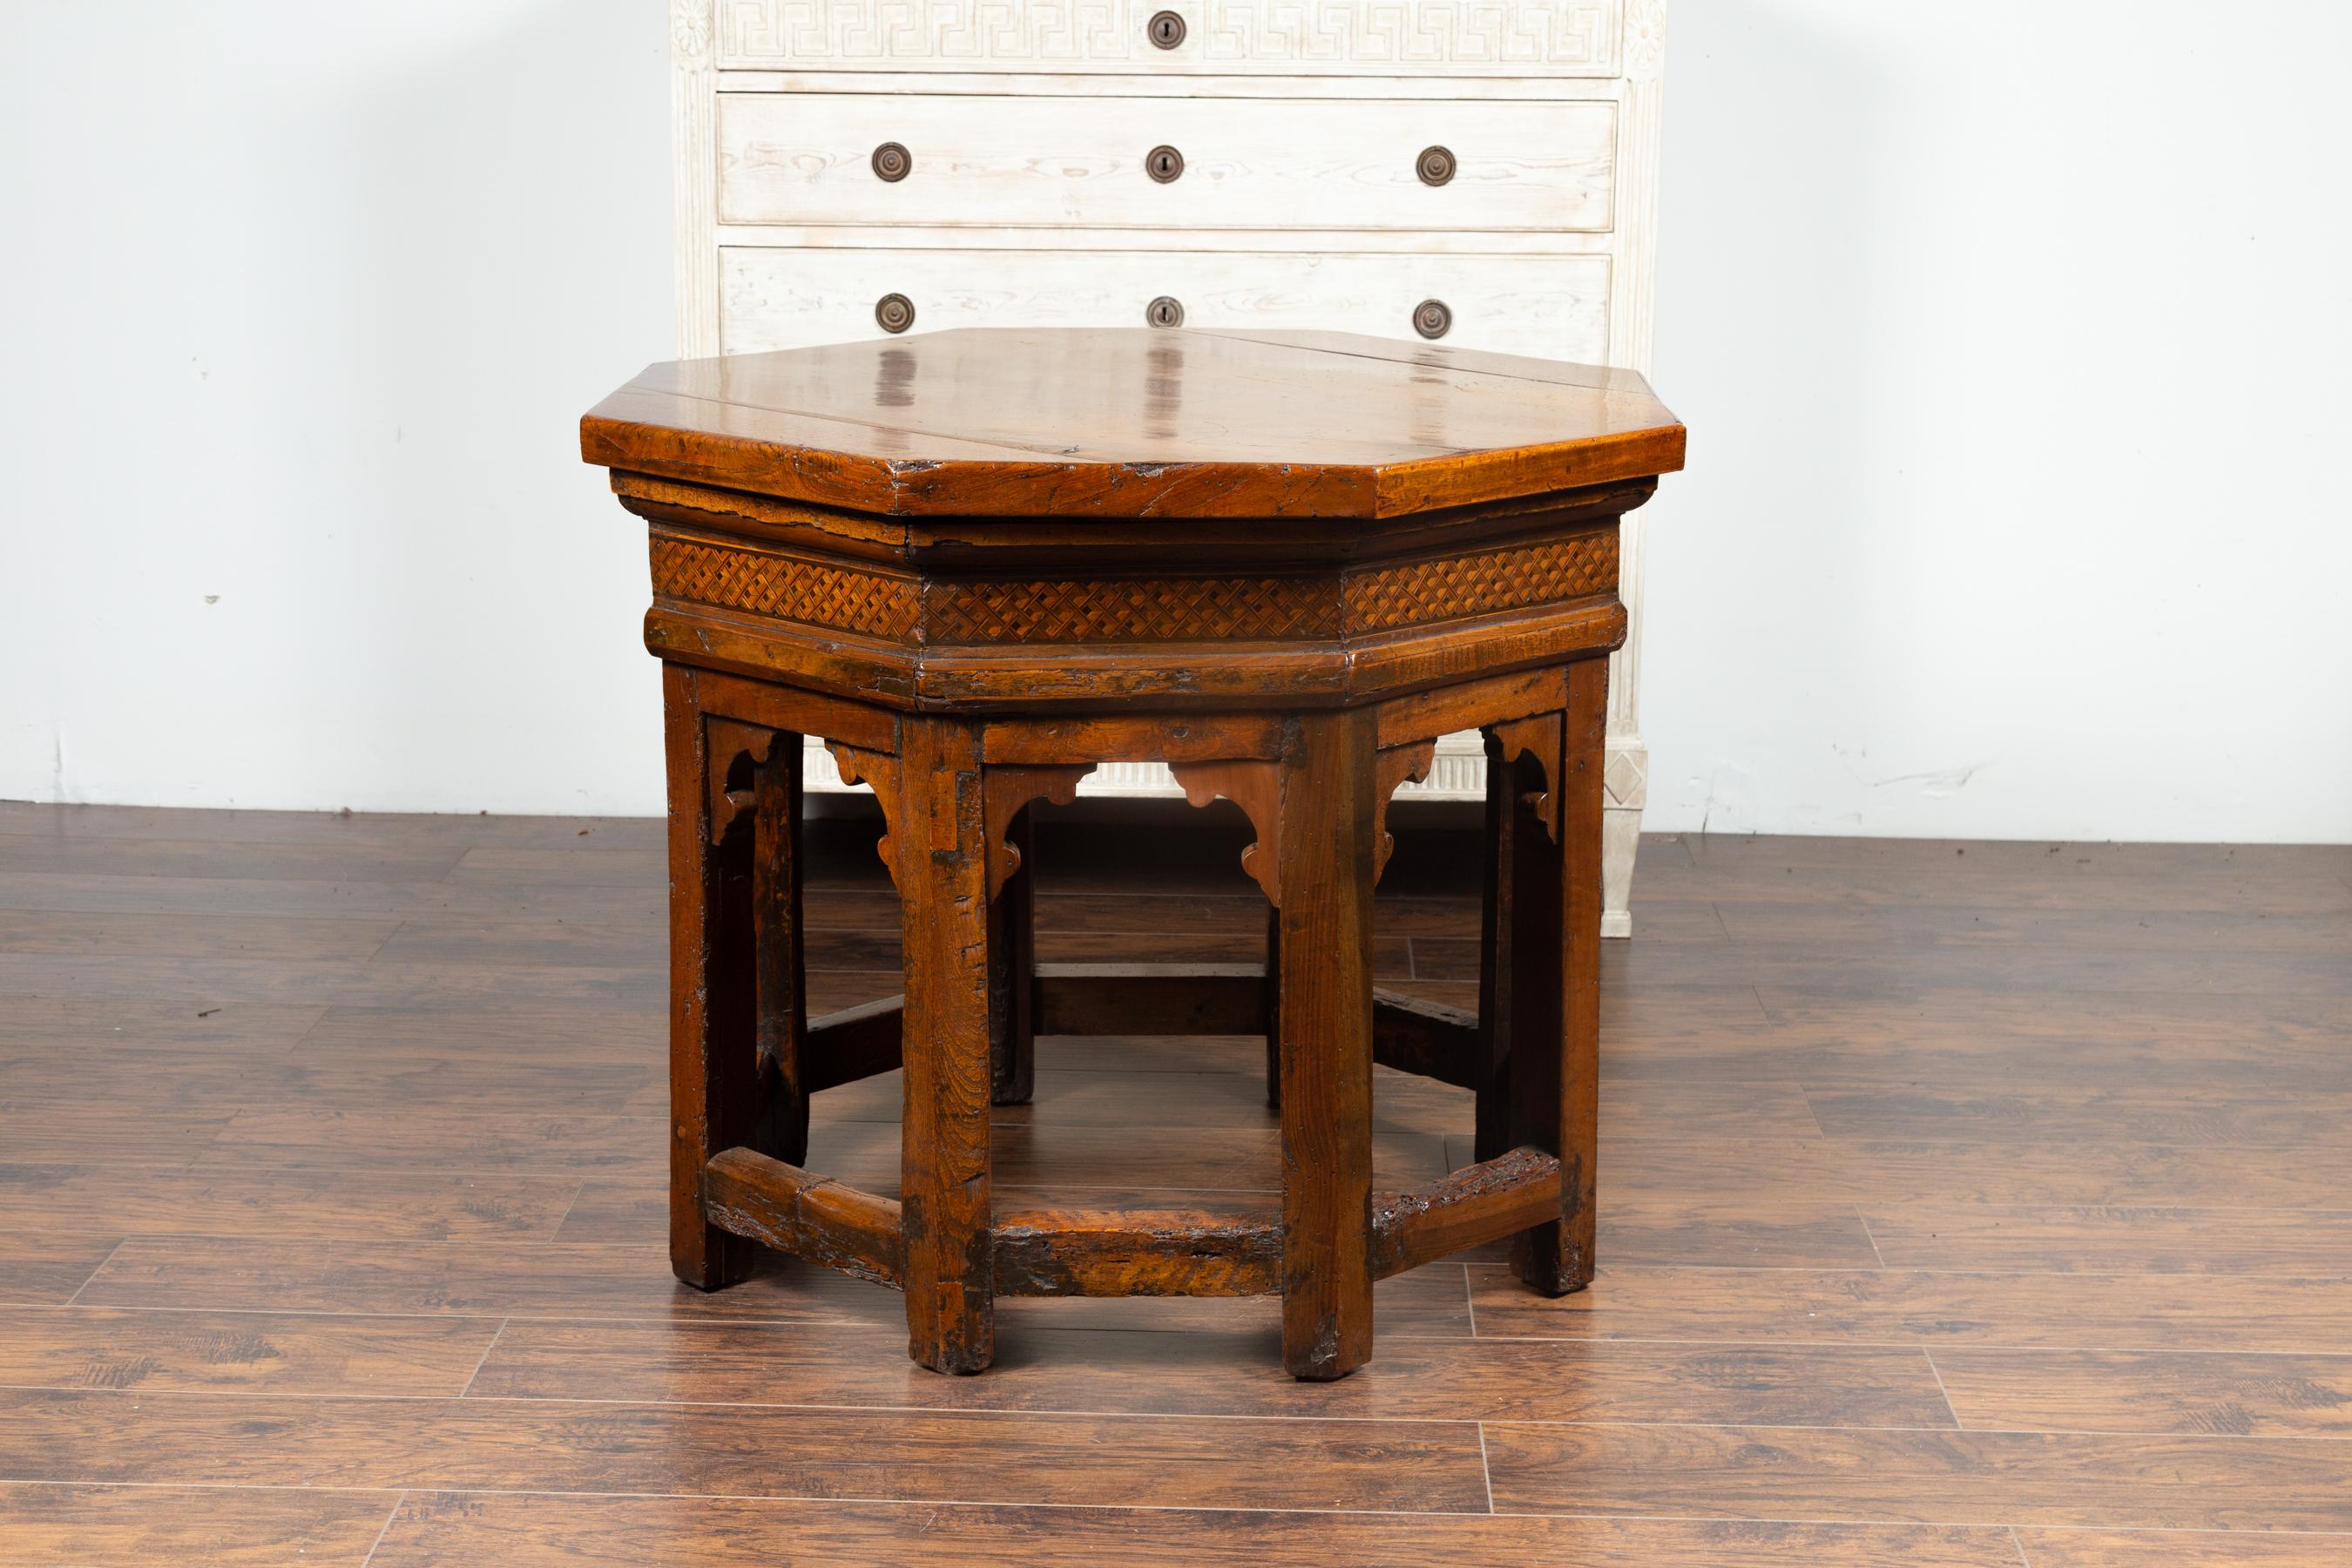 19th Century Italian Walnut Octagonal Table with Inlaid Trompe-L'œil Motifs In Good Condition For Sale In Atlanta, GA